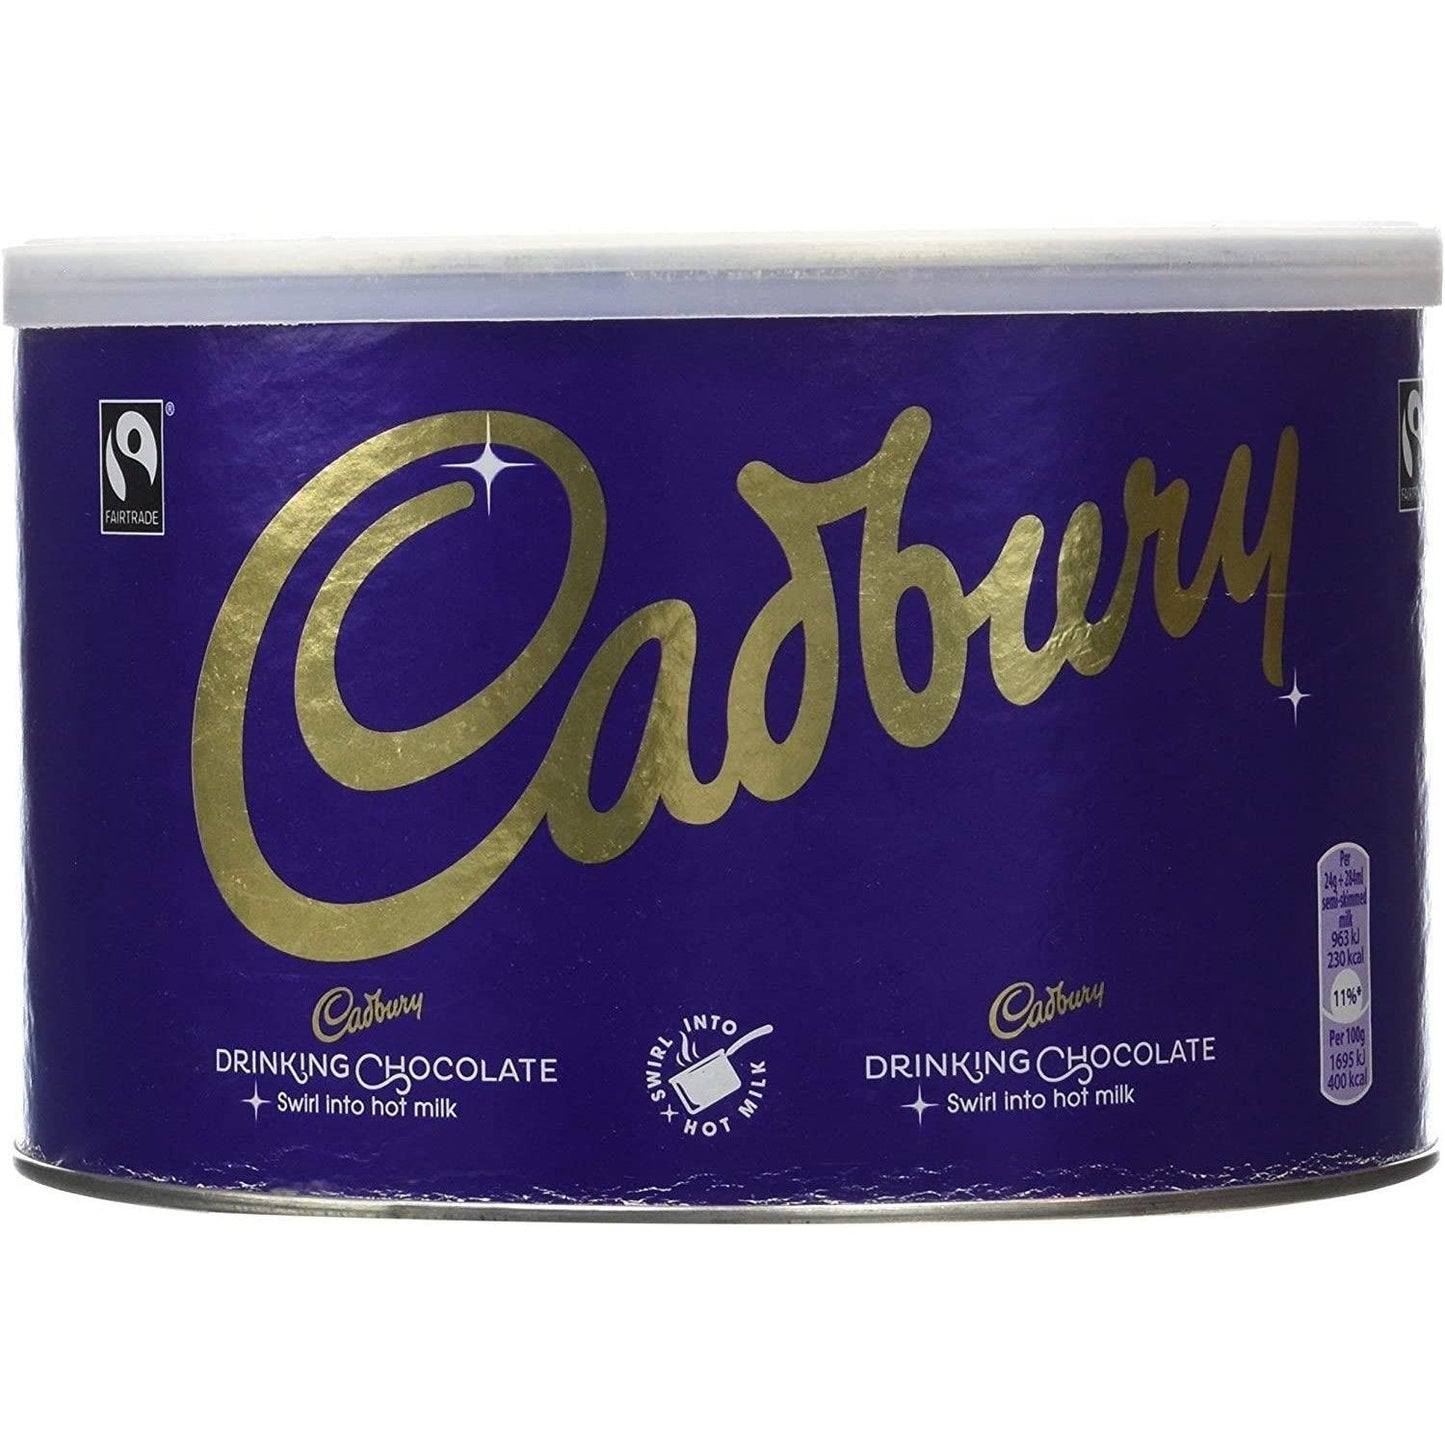 Cadbury Drinking Chocolate Drum 1kg